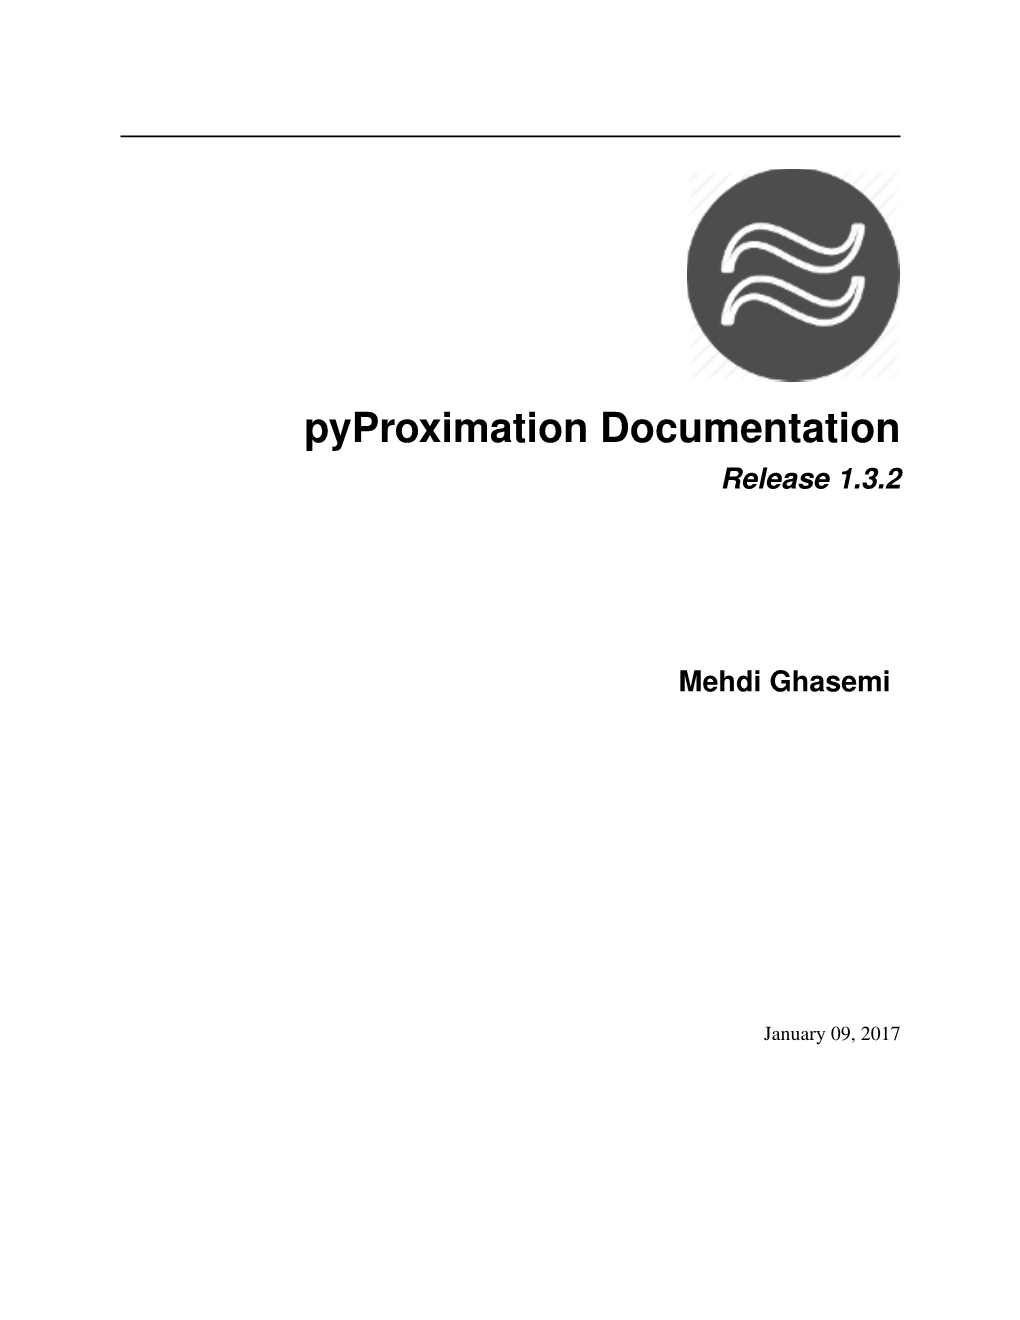 Pyproximation Documentation Release 1.3.2